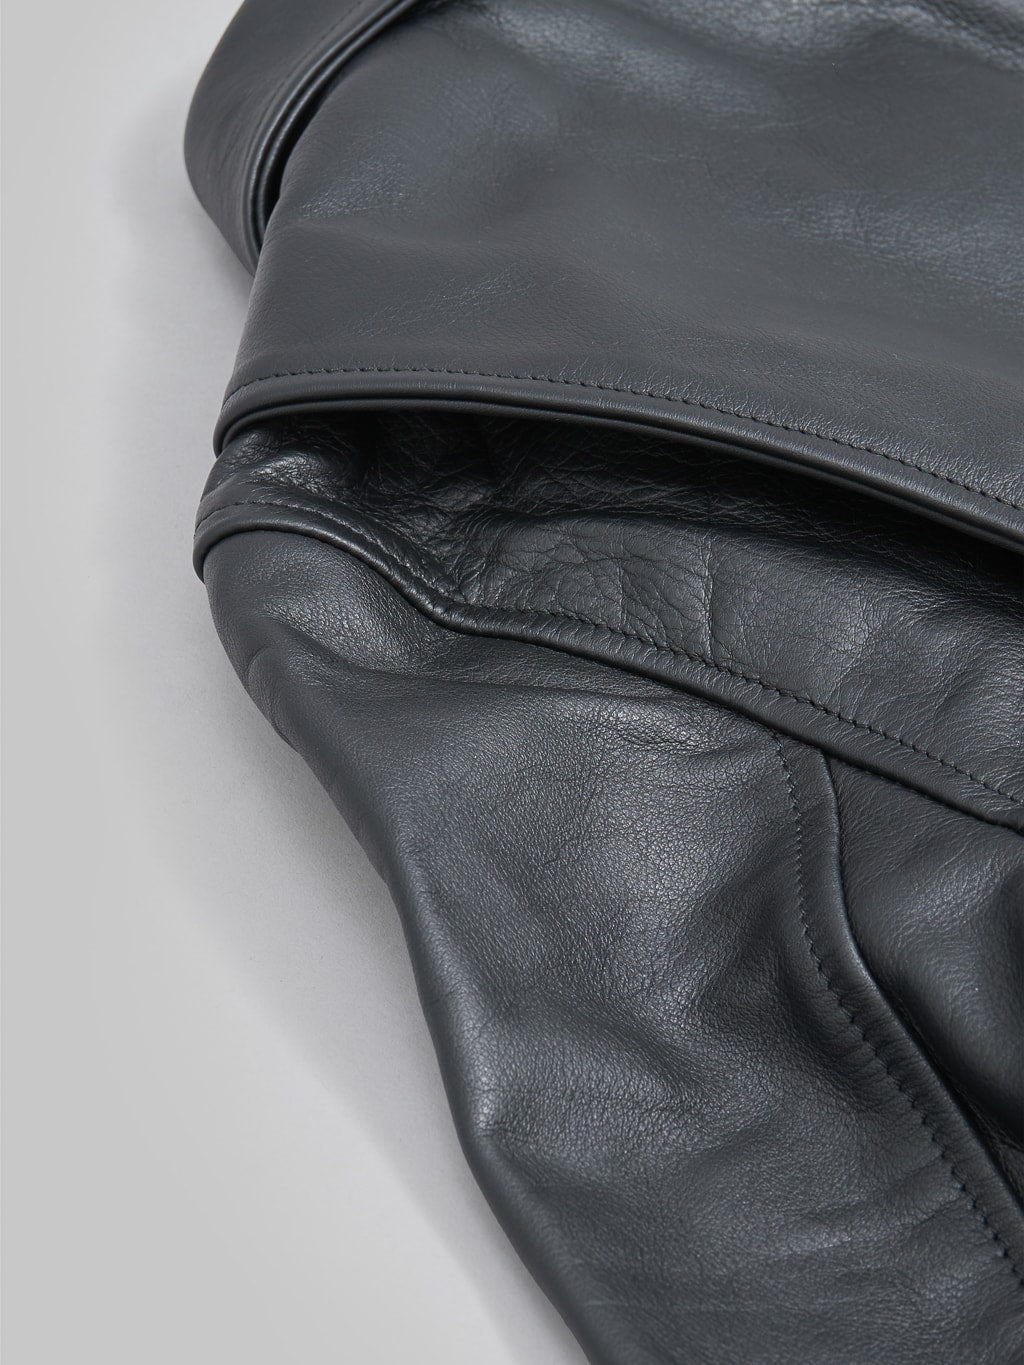 Shangri-La Heritage "Varenne" Black Leather Jacket